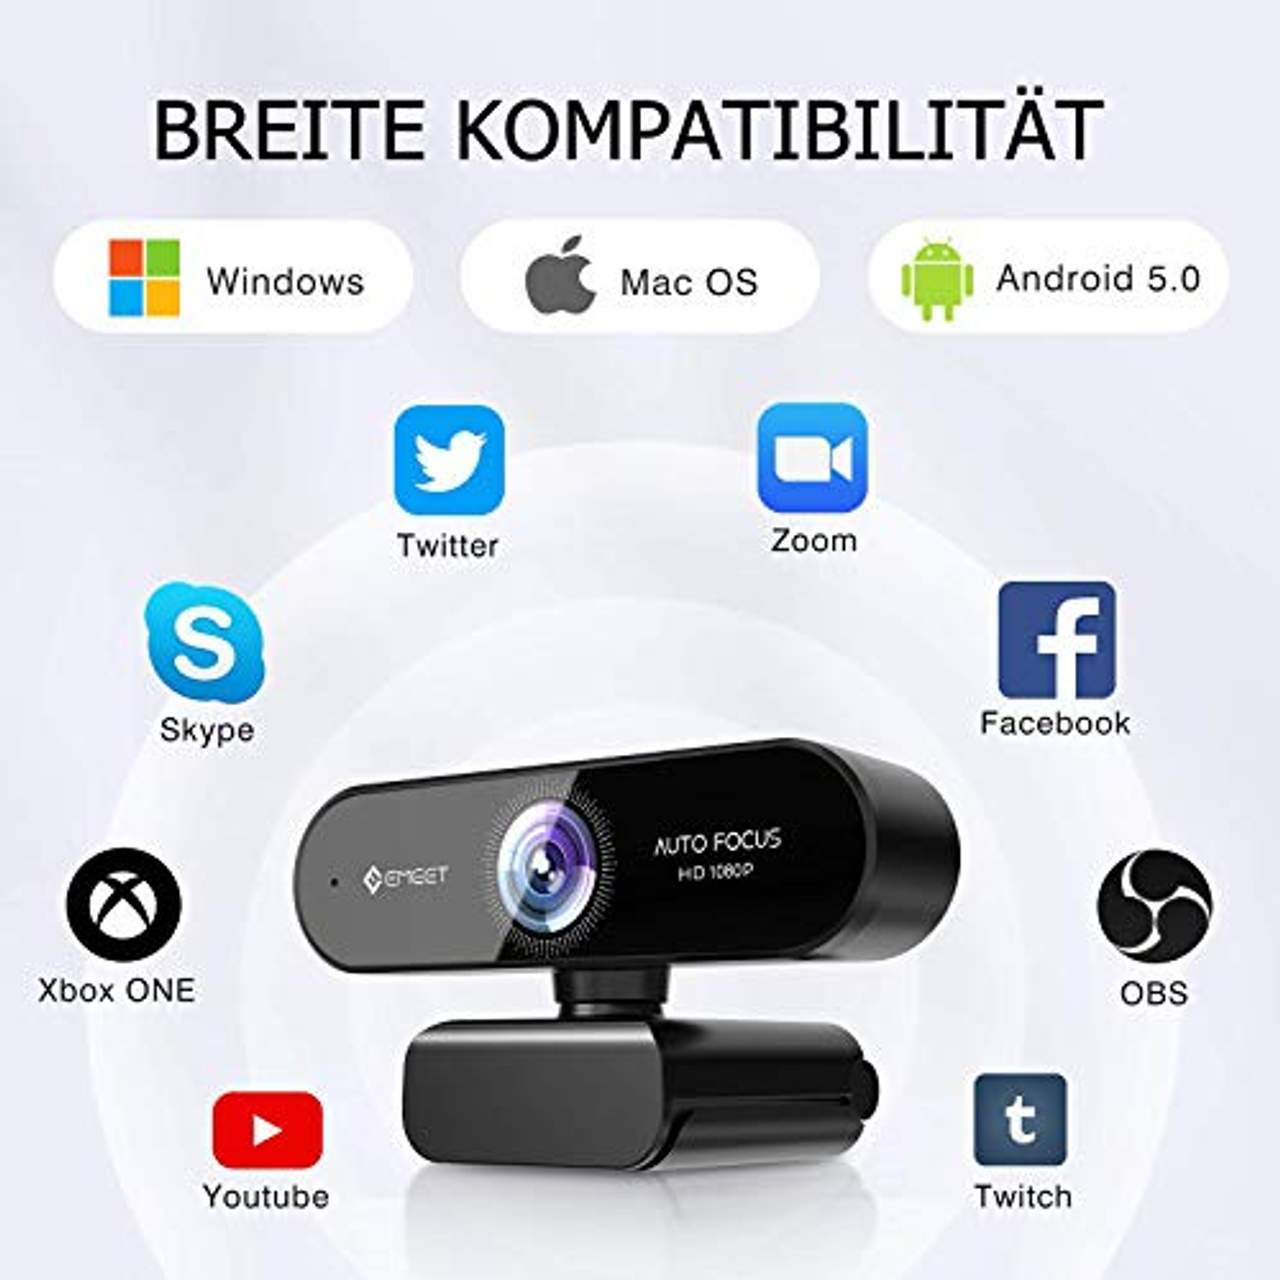 eMeet 1080P Webcam Nova Full HD Webcam